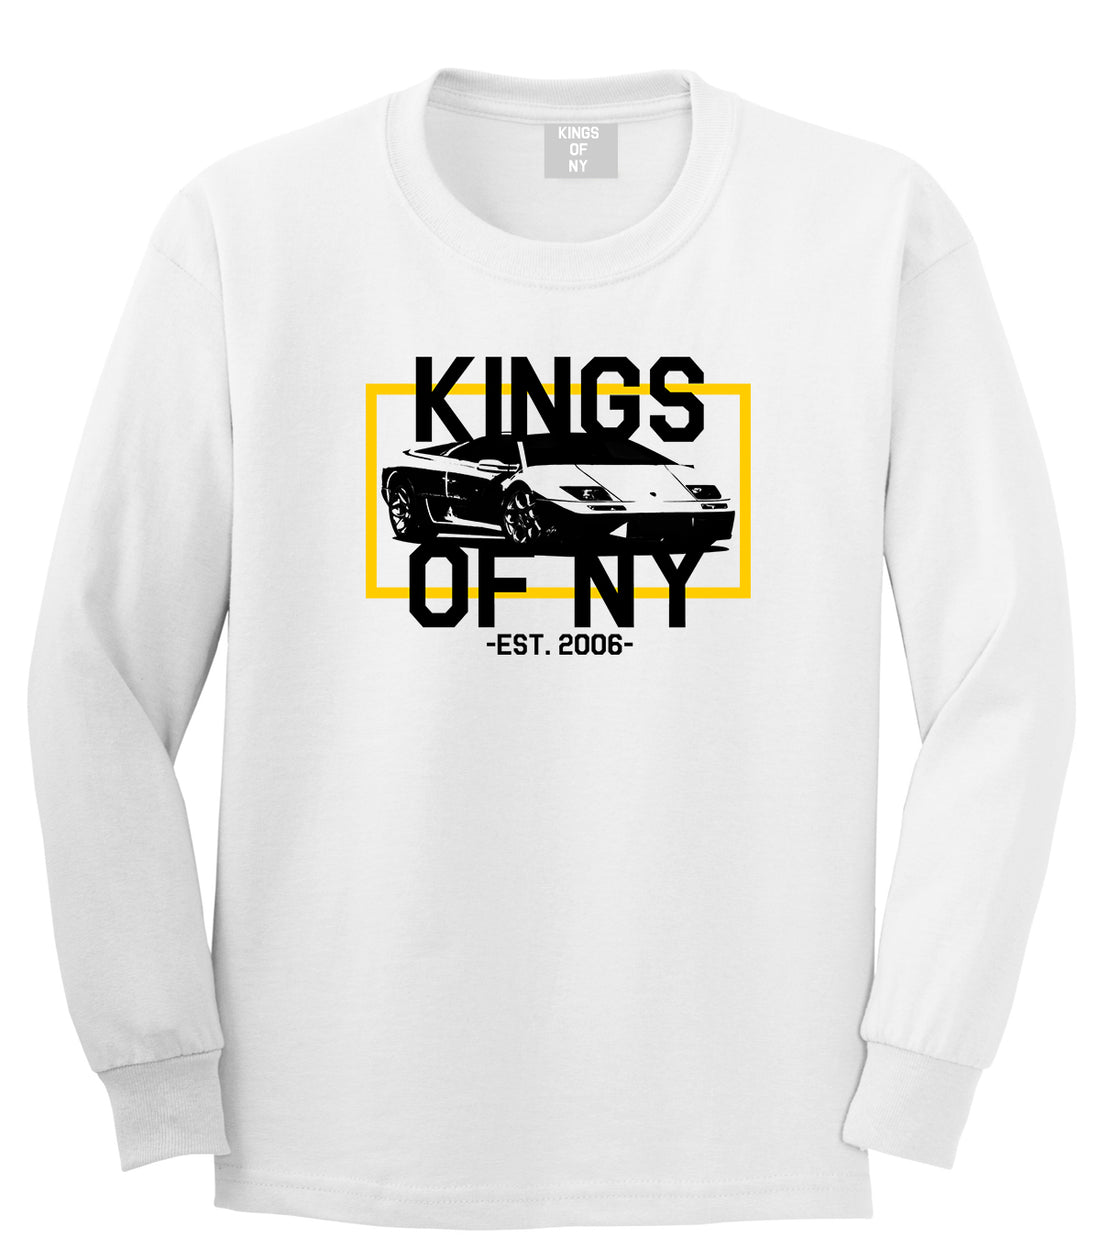 Lambo Fastlane Est 2006 Mens Long Sleeve T-Shirt White by Kings Of NY